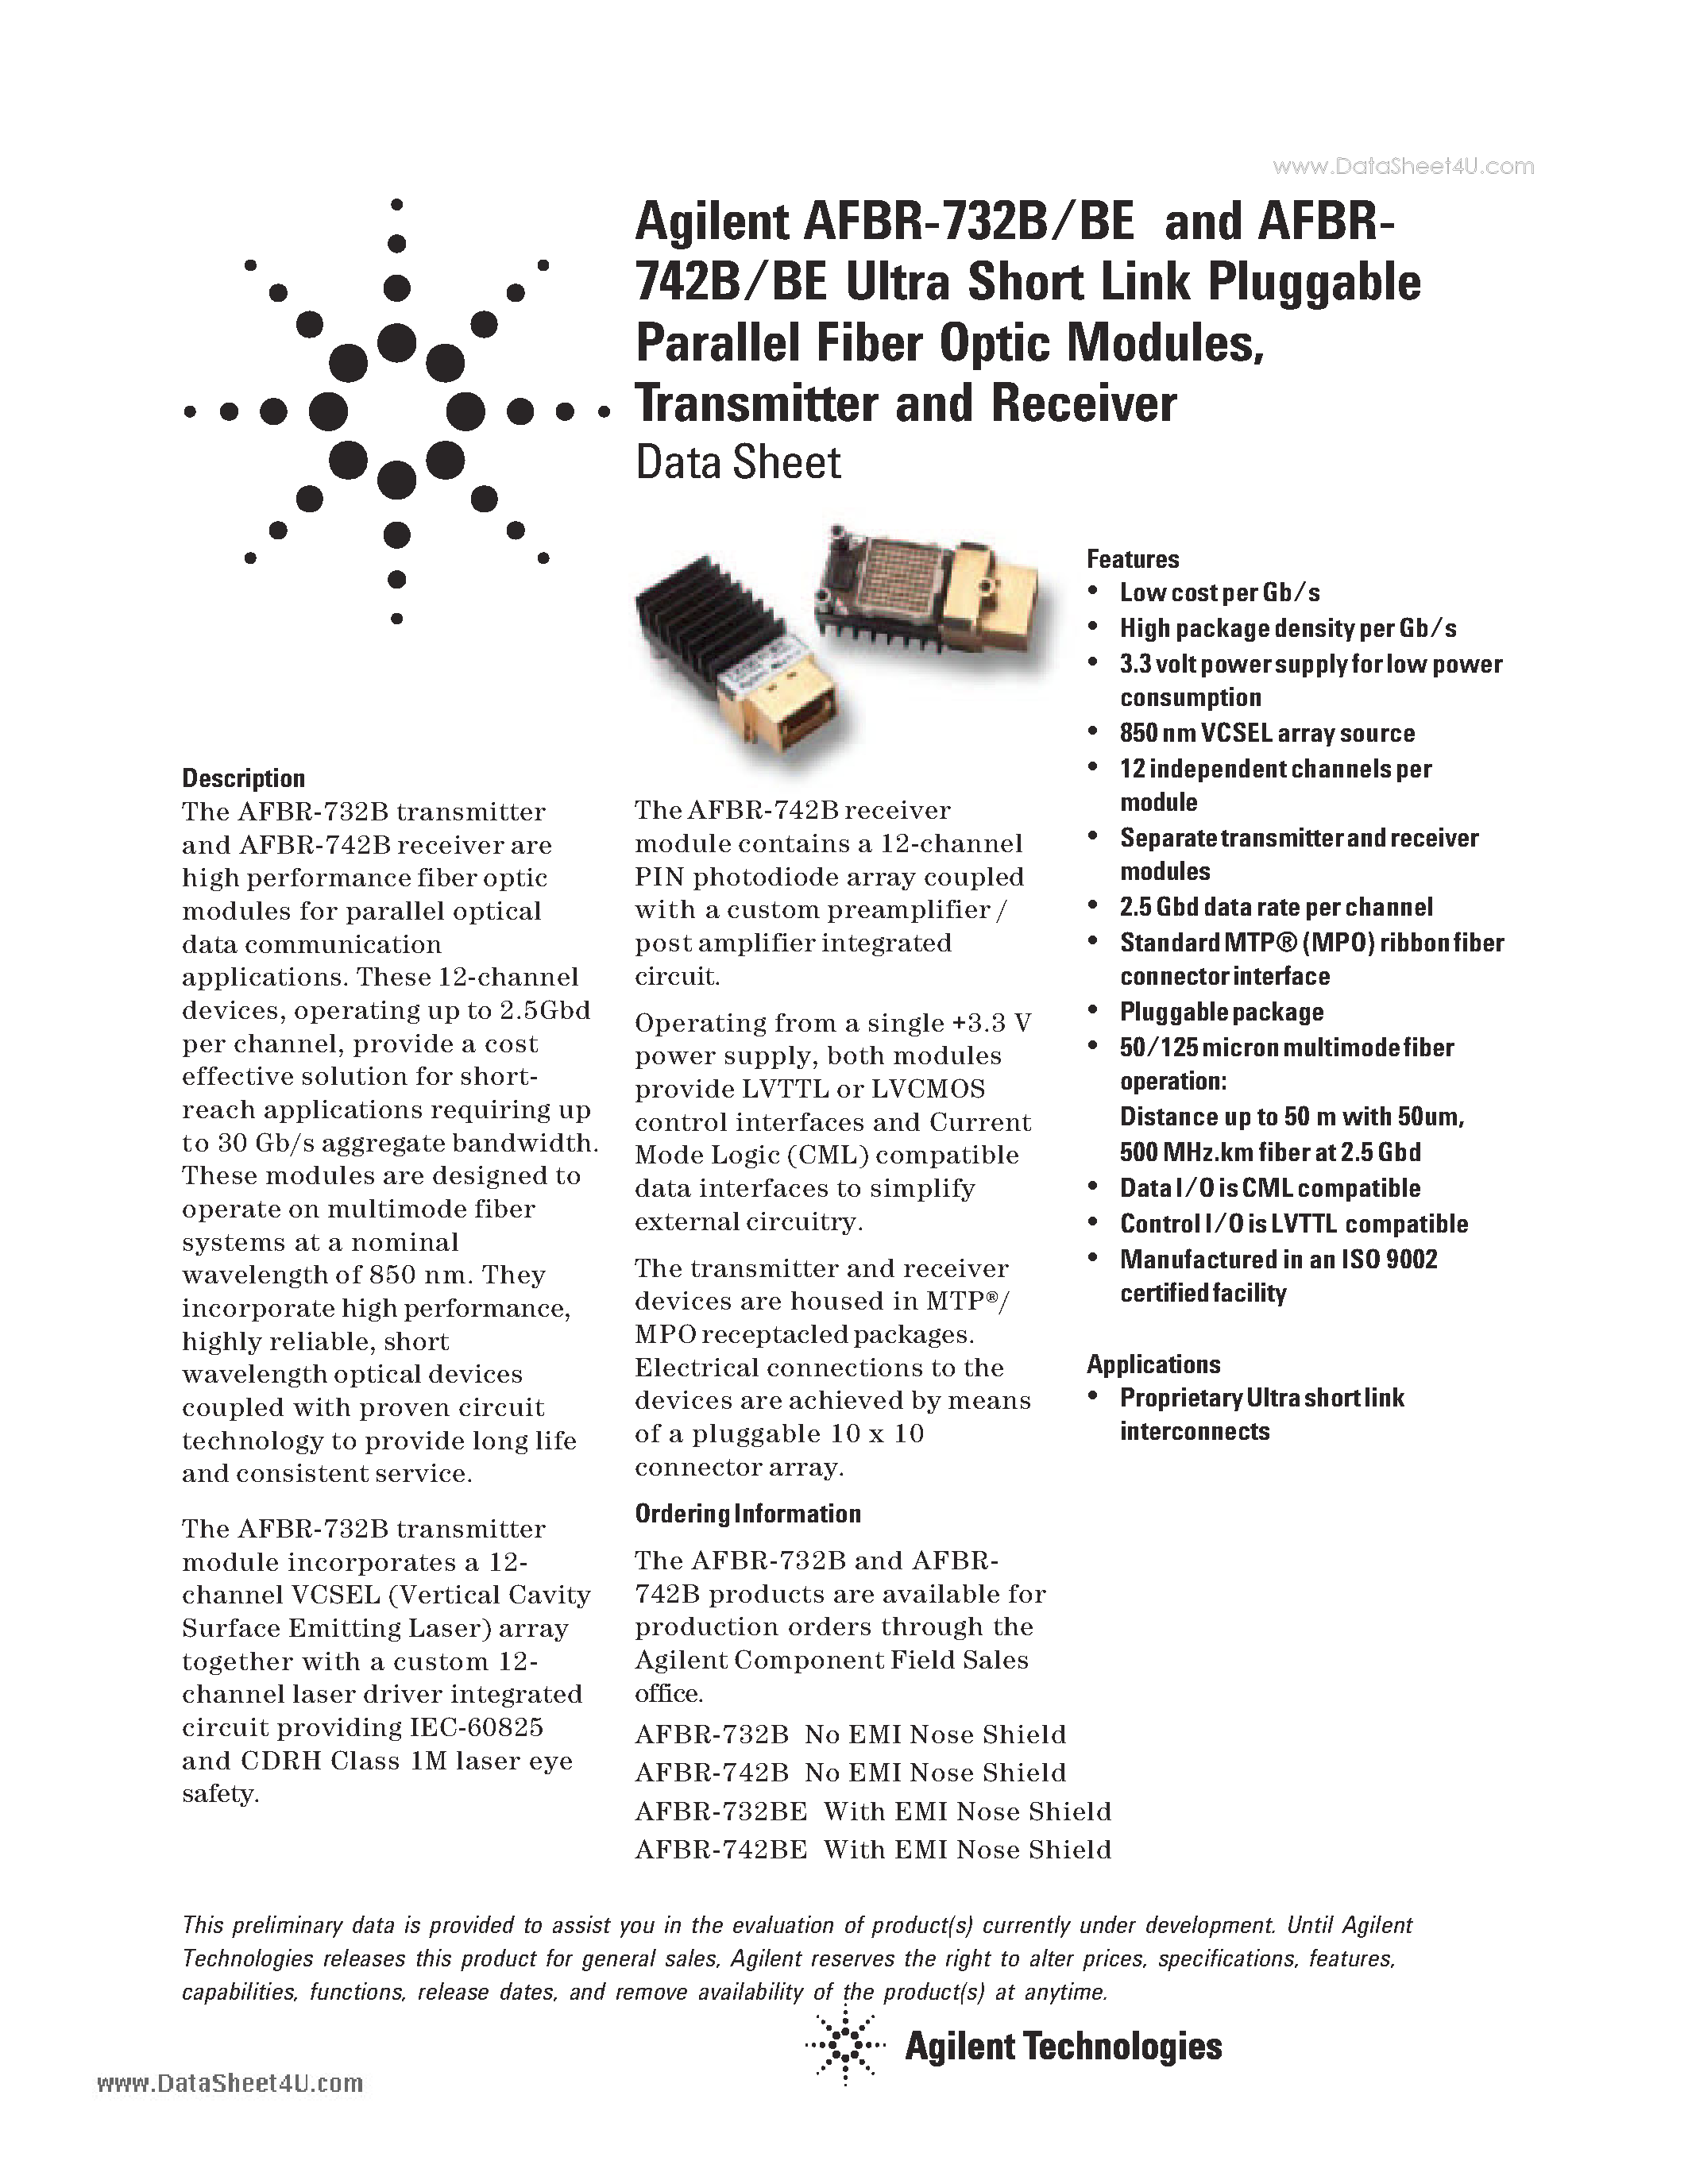 Datasheet AFBR-732B - Ultra Short Link Pluggable Parallel Fiber Optic Modules page 1